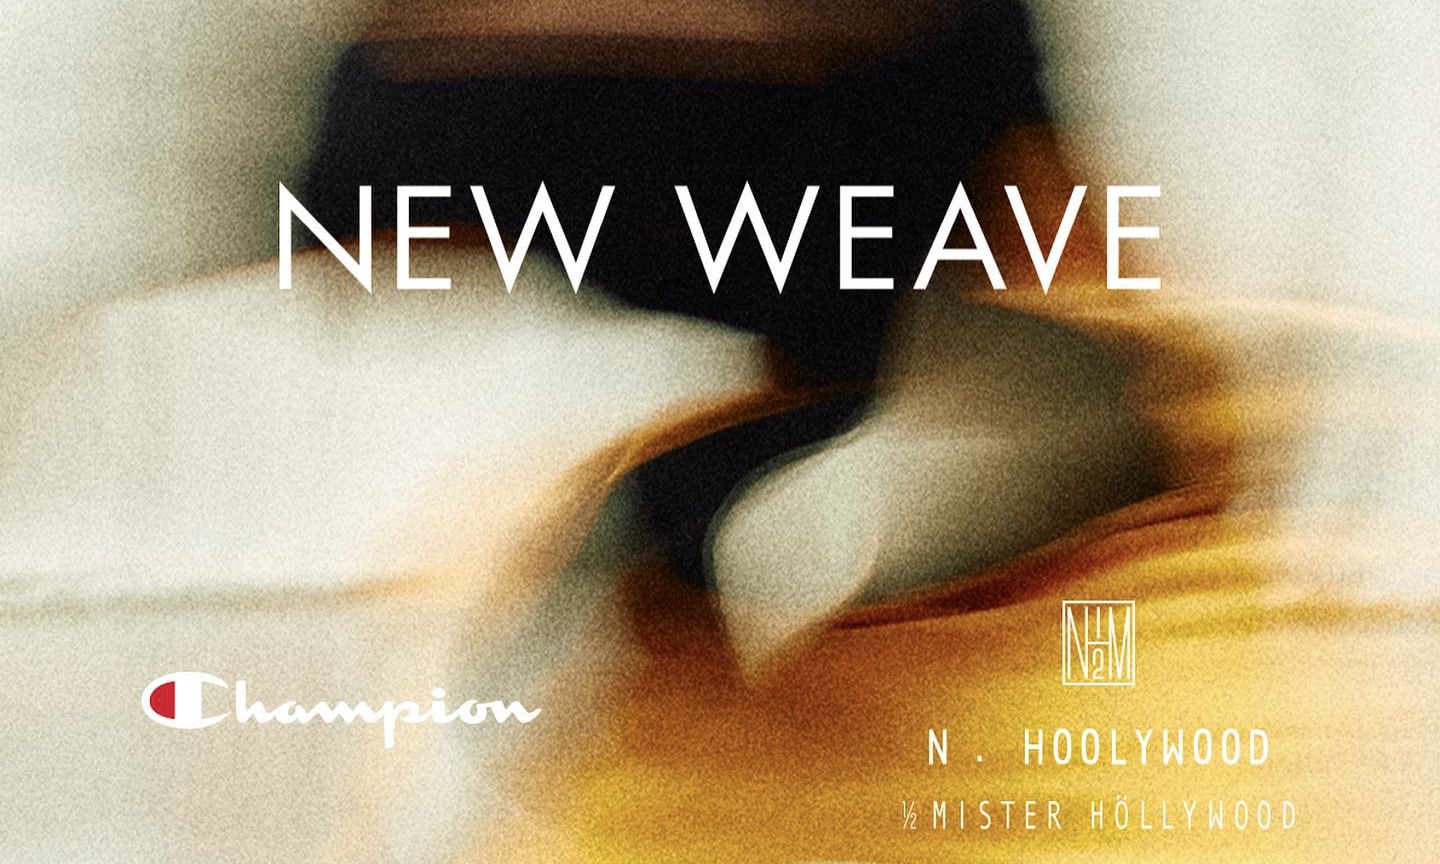 N.HOOLYWOOD x Champion 的合作项目「NEW WEAVE」推出第四弹